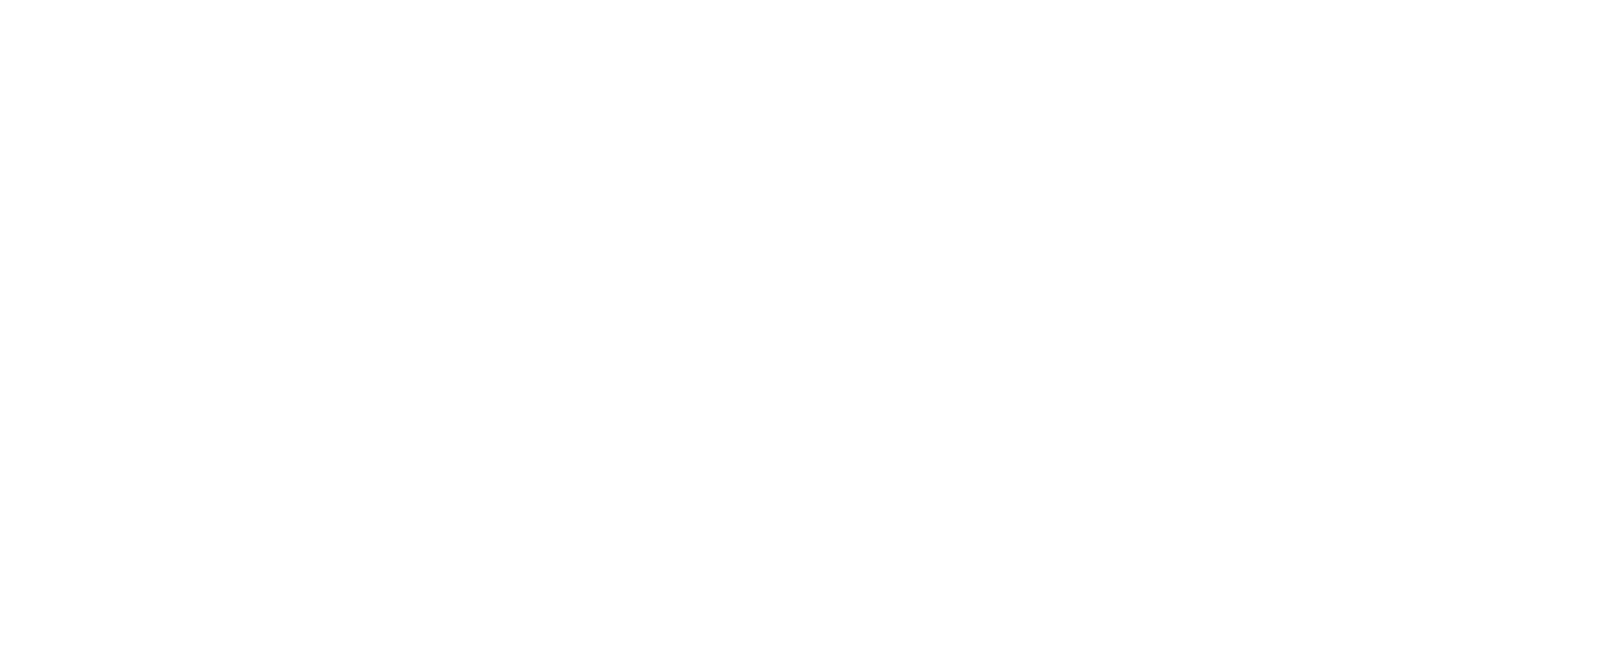 The-Boardroom-League-White-LogoTM